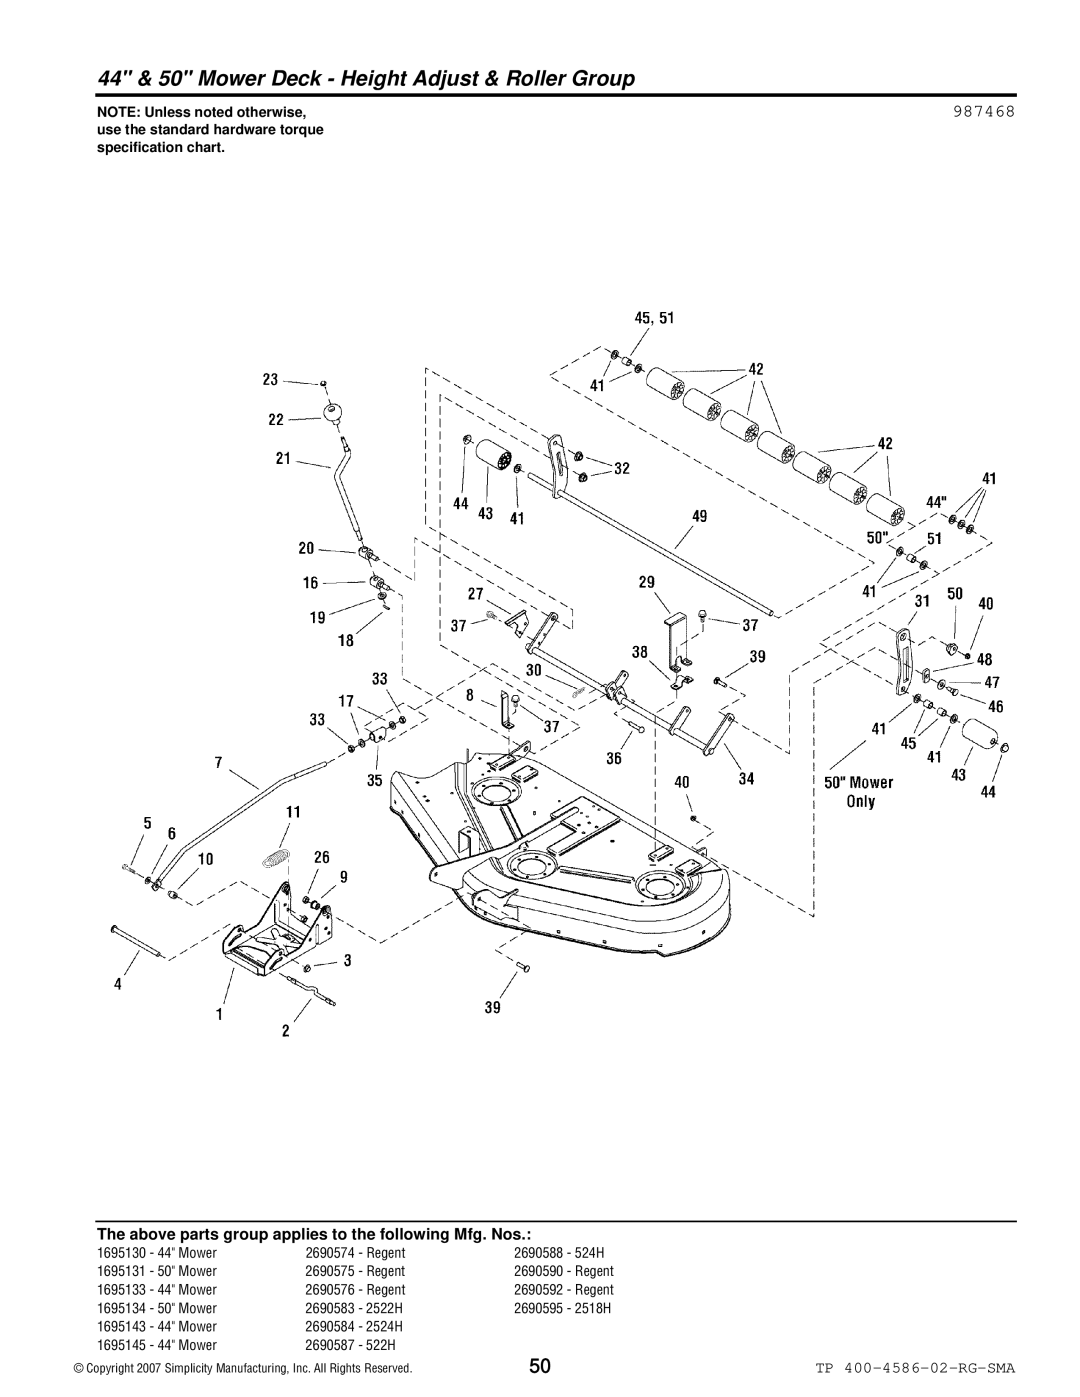 Snapper 500 Series manual 44 & 50 Mower Deck Height Adjust & Roller Group 